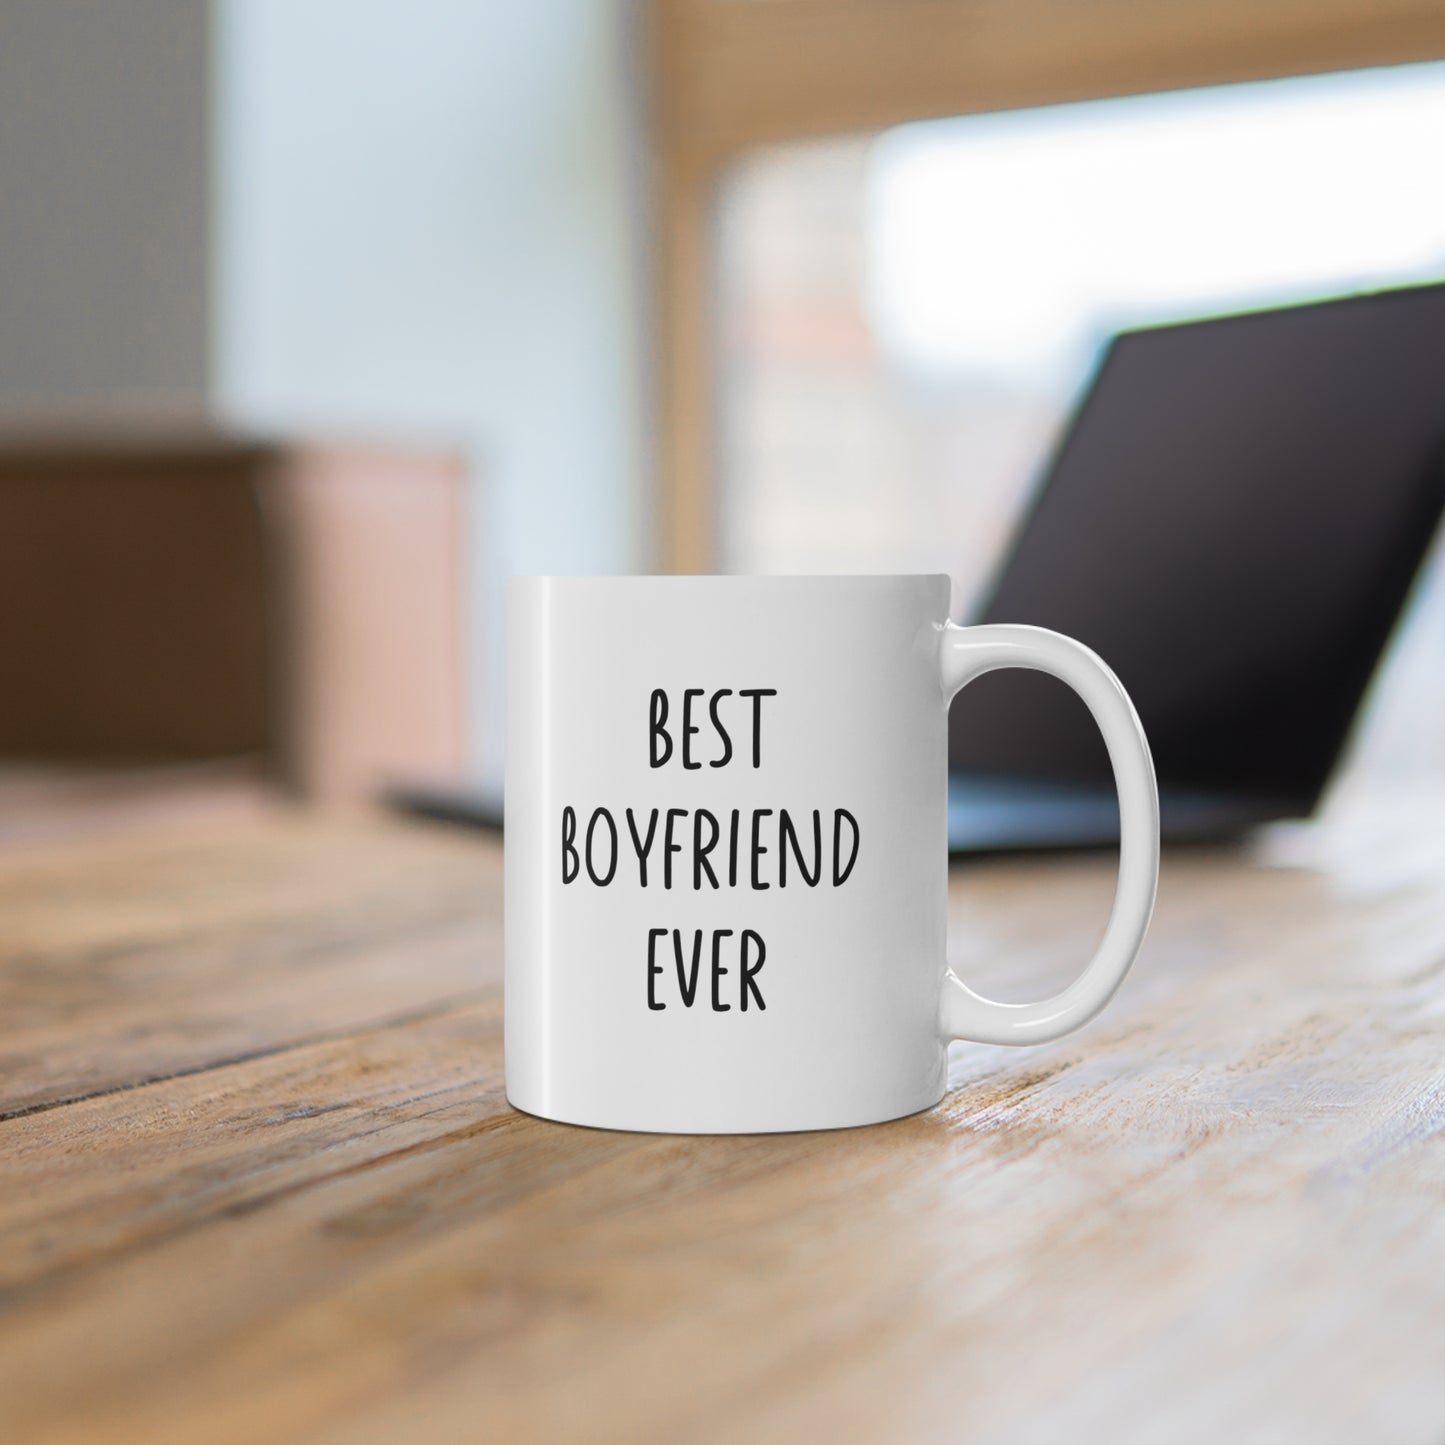 11oz ceramic mug with quote Best Boyfriend Ever